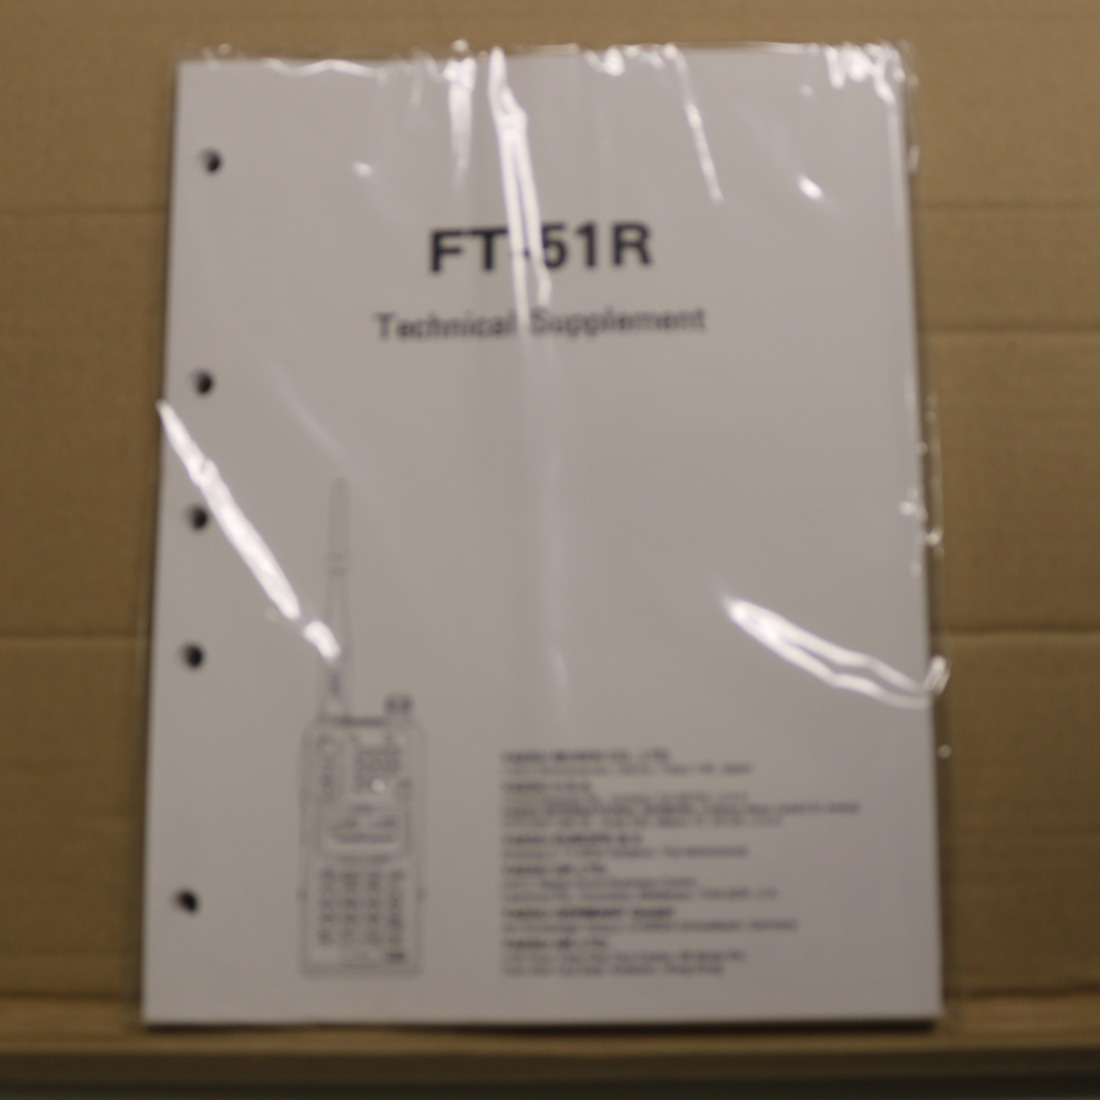 Yaesu FT-51R Technical Supplement